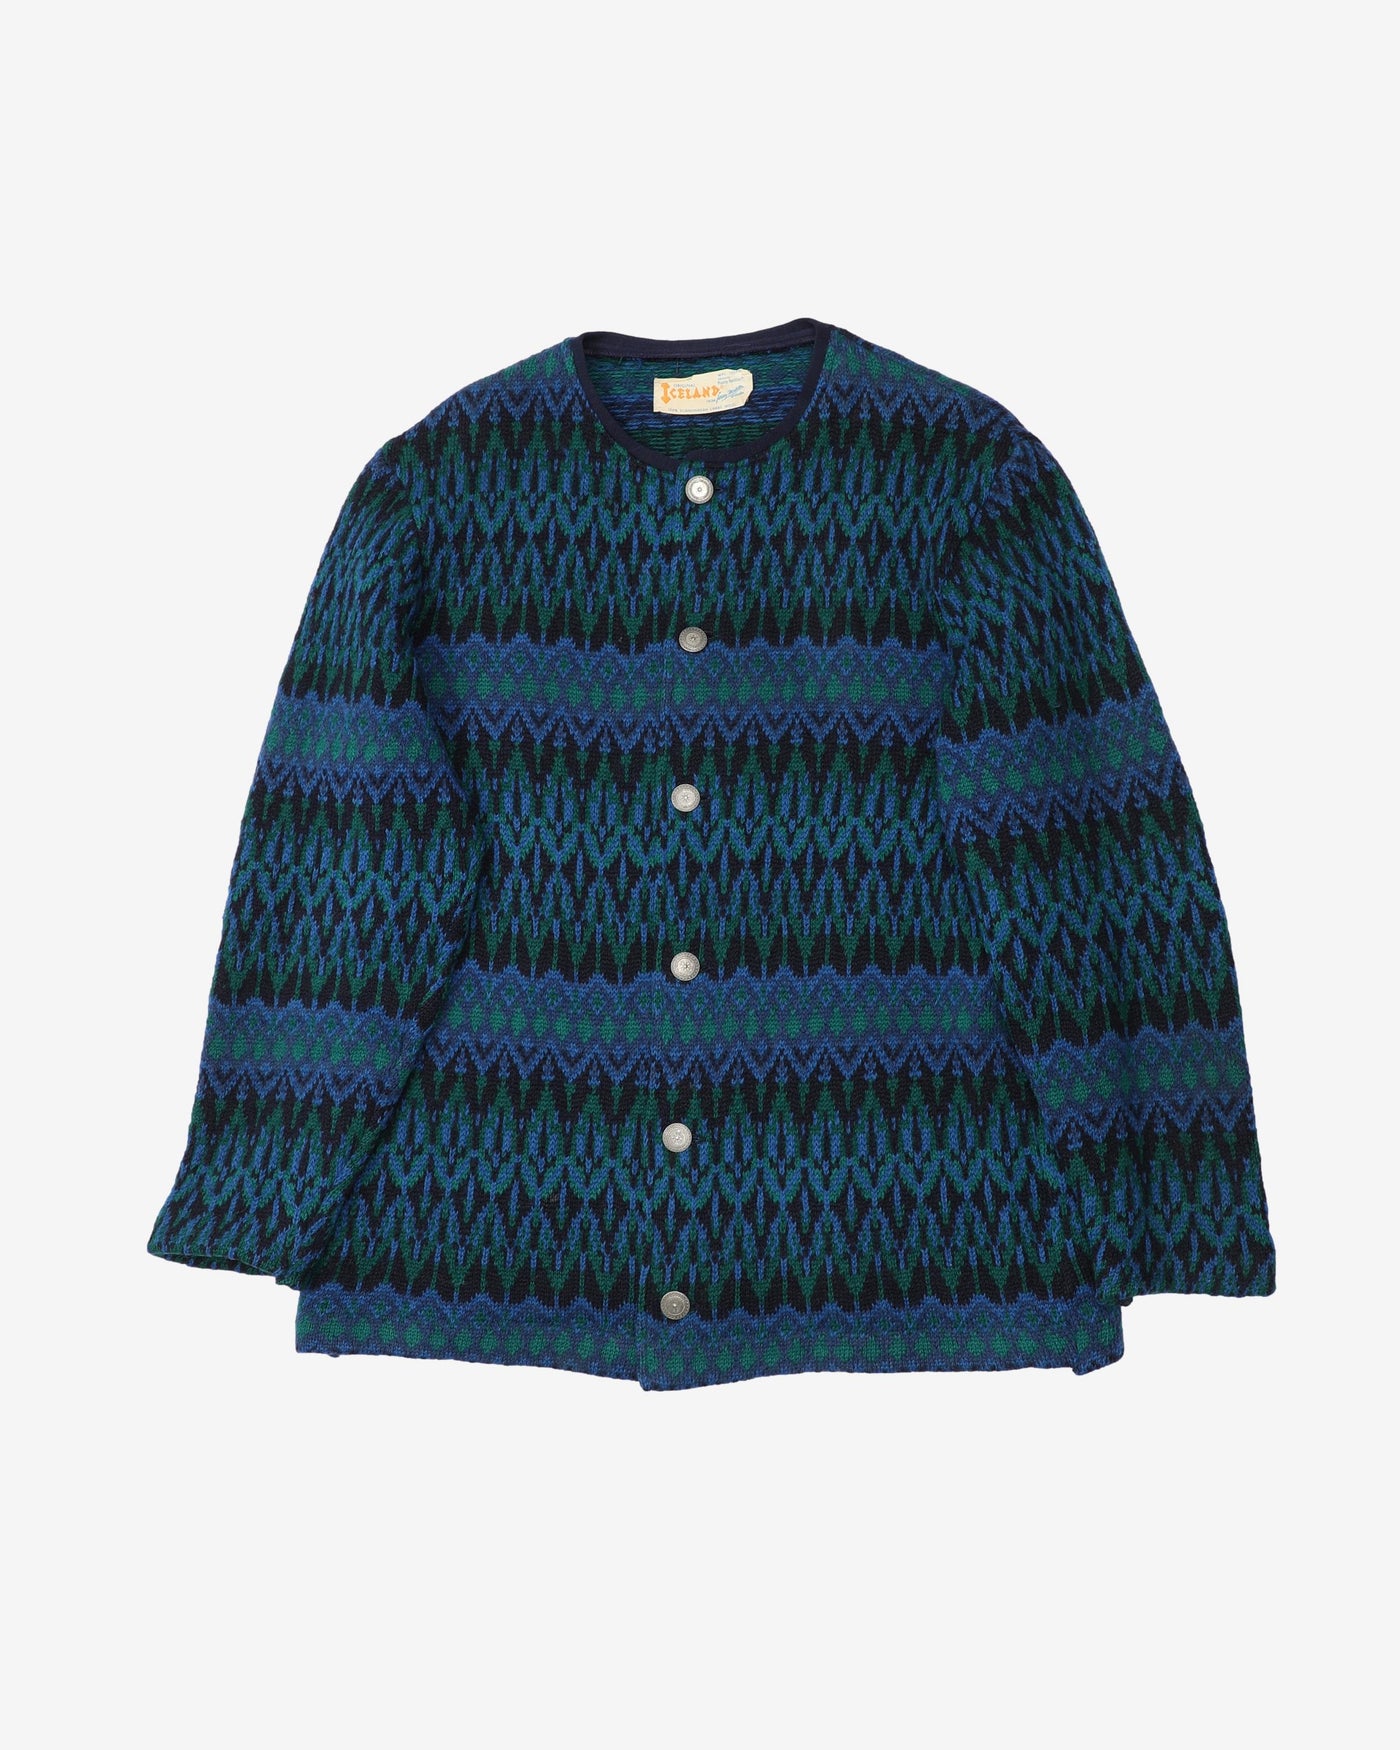 1970s Icelandic knitted cardigan - M